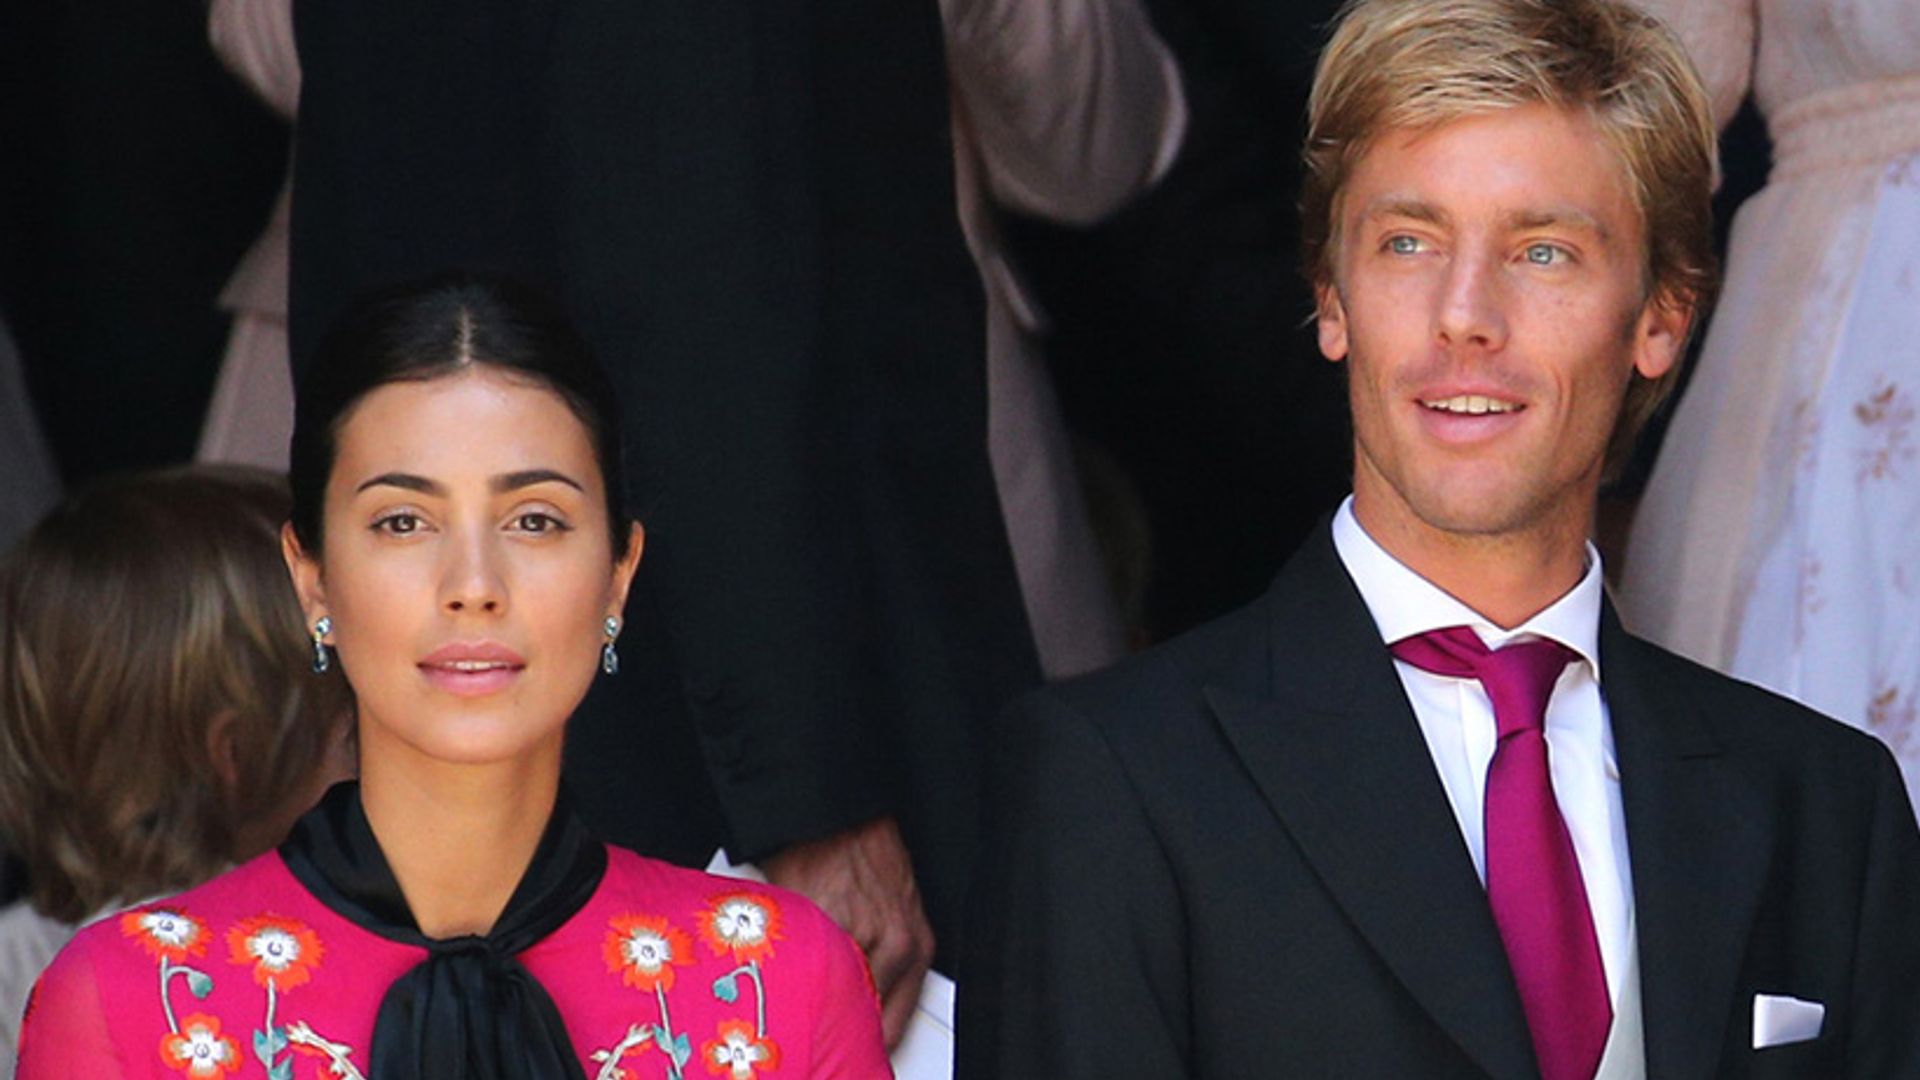 Prince Christian and Alessandra de Osma's royal wedding date revealed